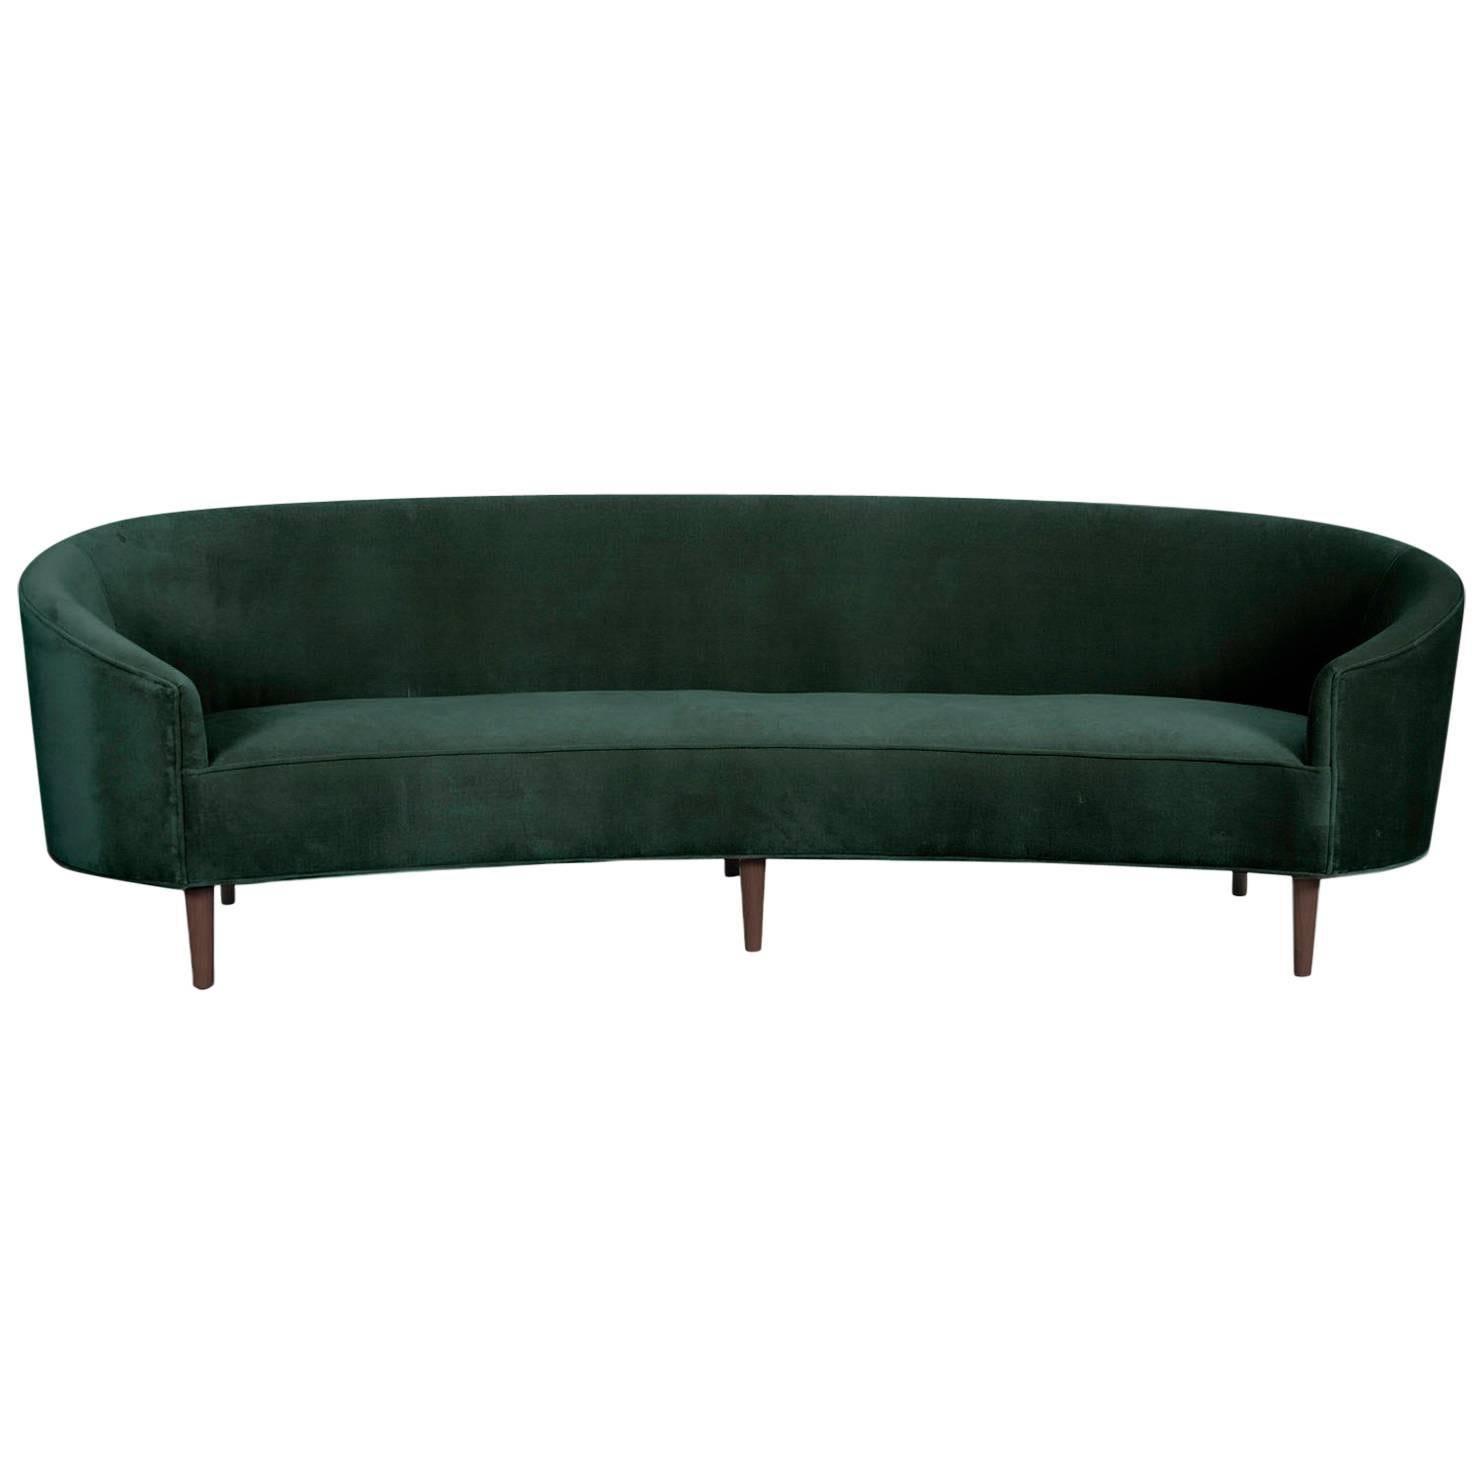 Art Deco Style Crescent Sofa with Walnut Legs in Hunter Green Velvet